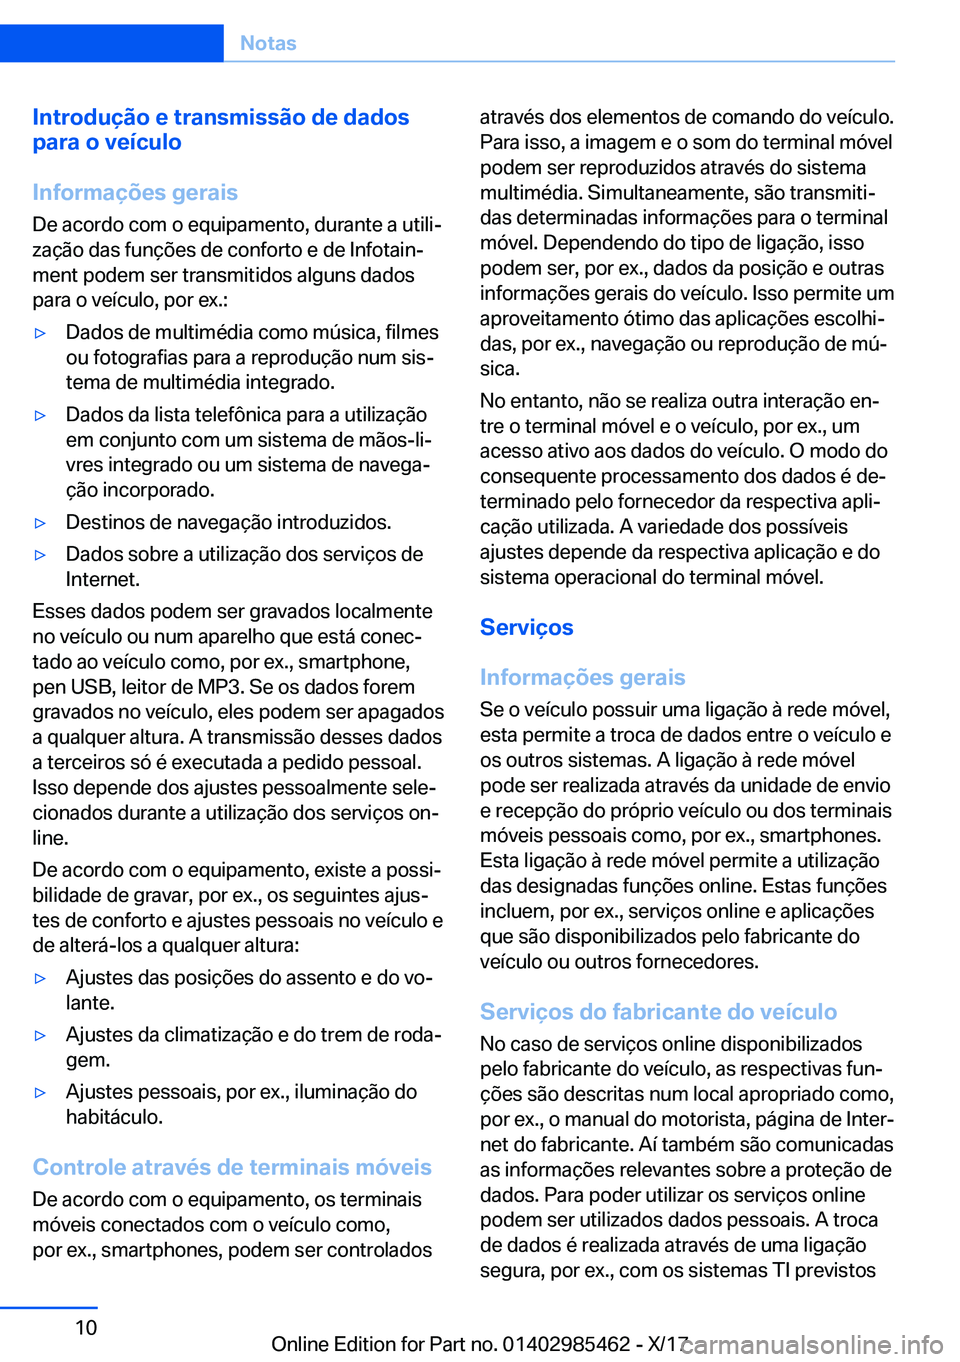 BMW X1 2018  Manual do condutor (in Portuguese) �I�n�t�r�o�d�u�